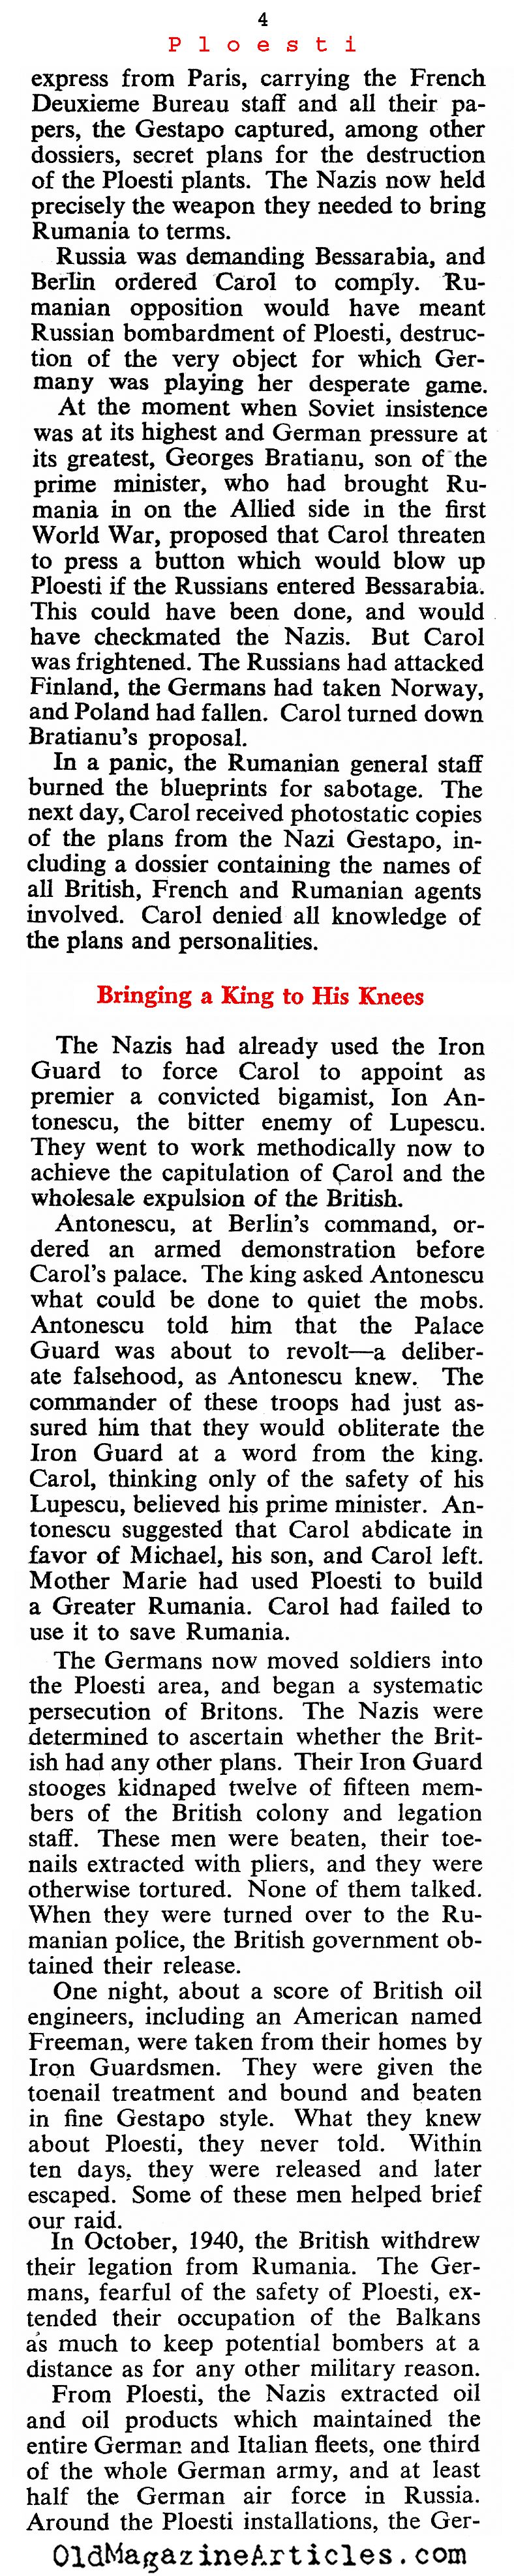 The Success of the Ploesti Raid (Collier's Magazine, 1943)